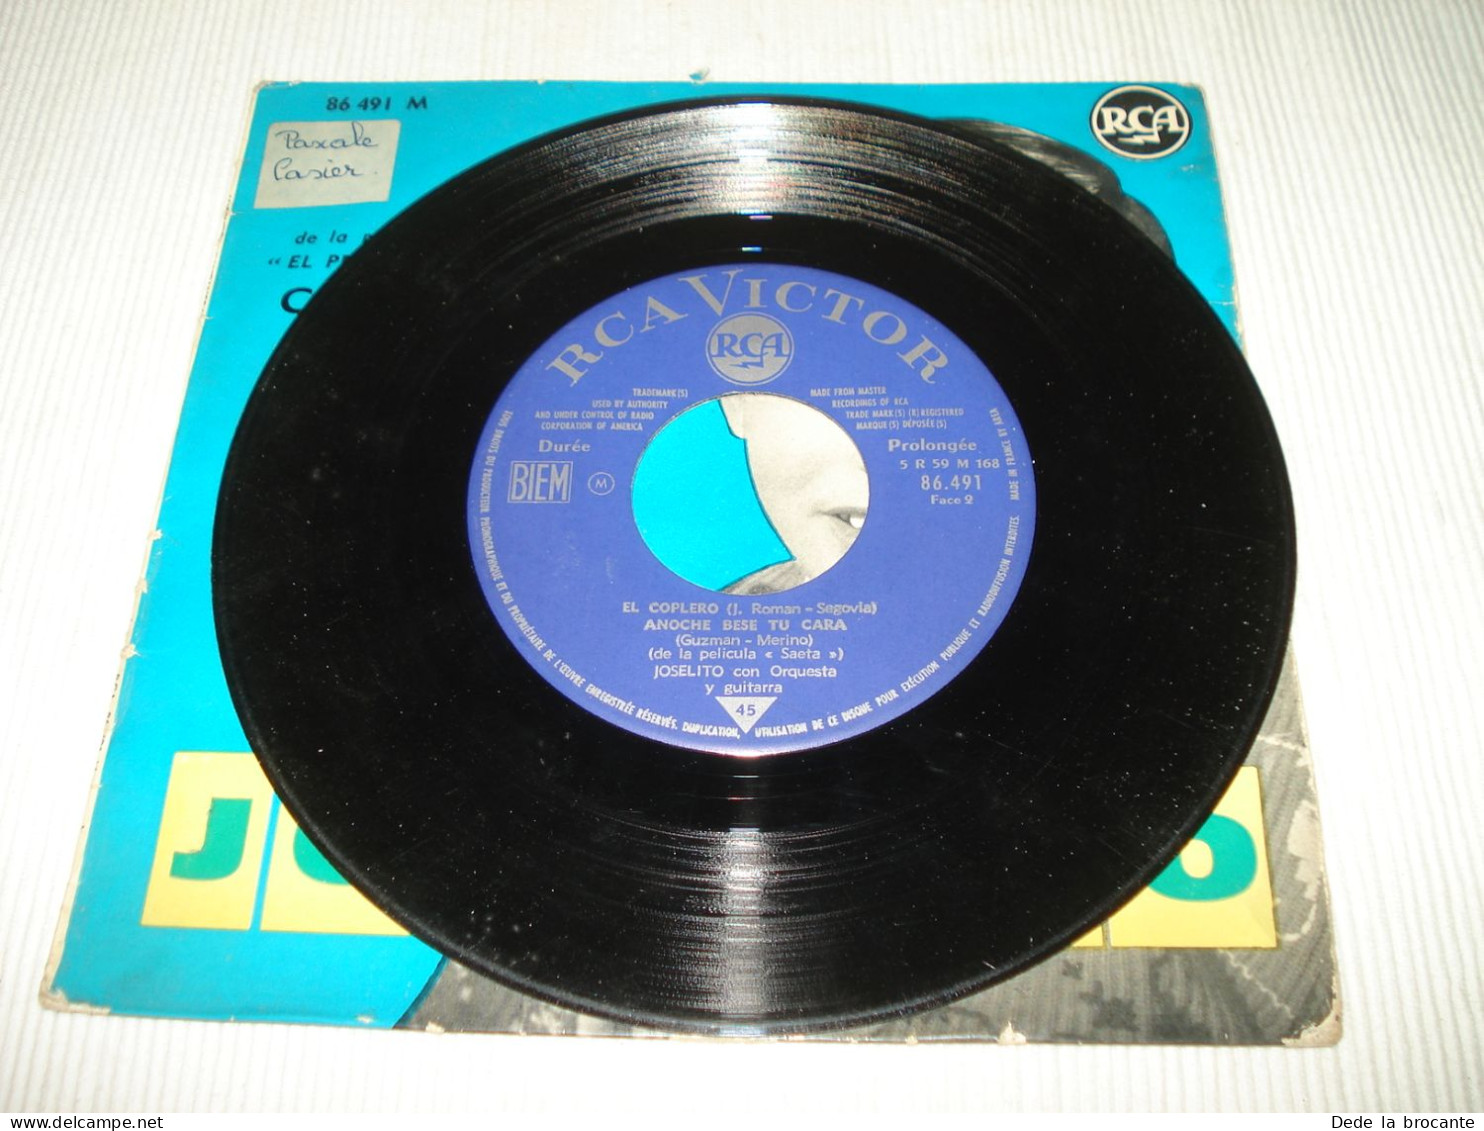 B12 / Joselito – Musique Film Campanera – EP - RCA – 86.491 - FR 1963 -  EX/VG+ - Musique De Films